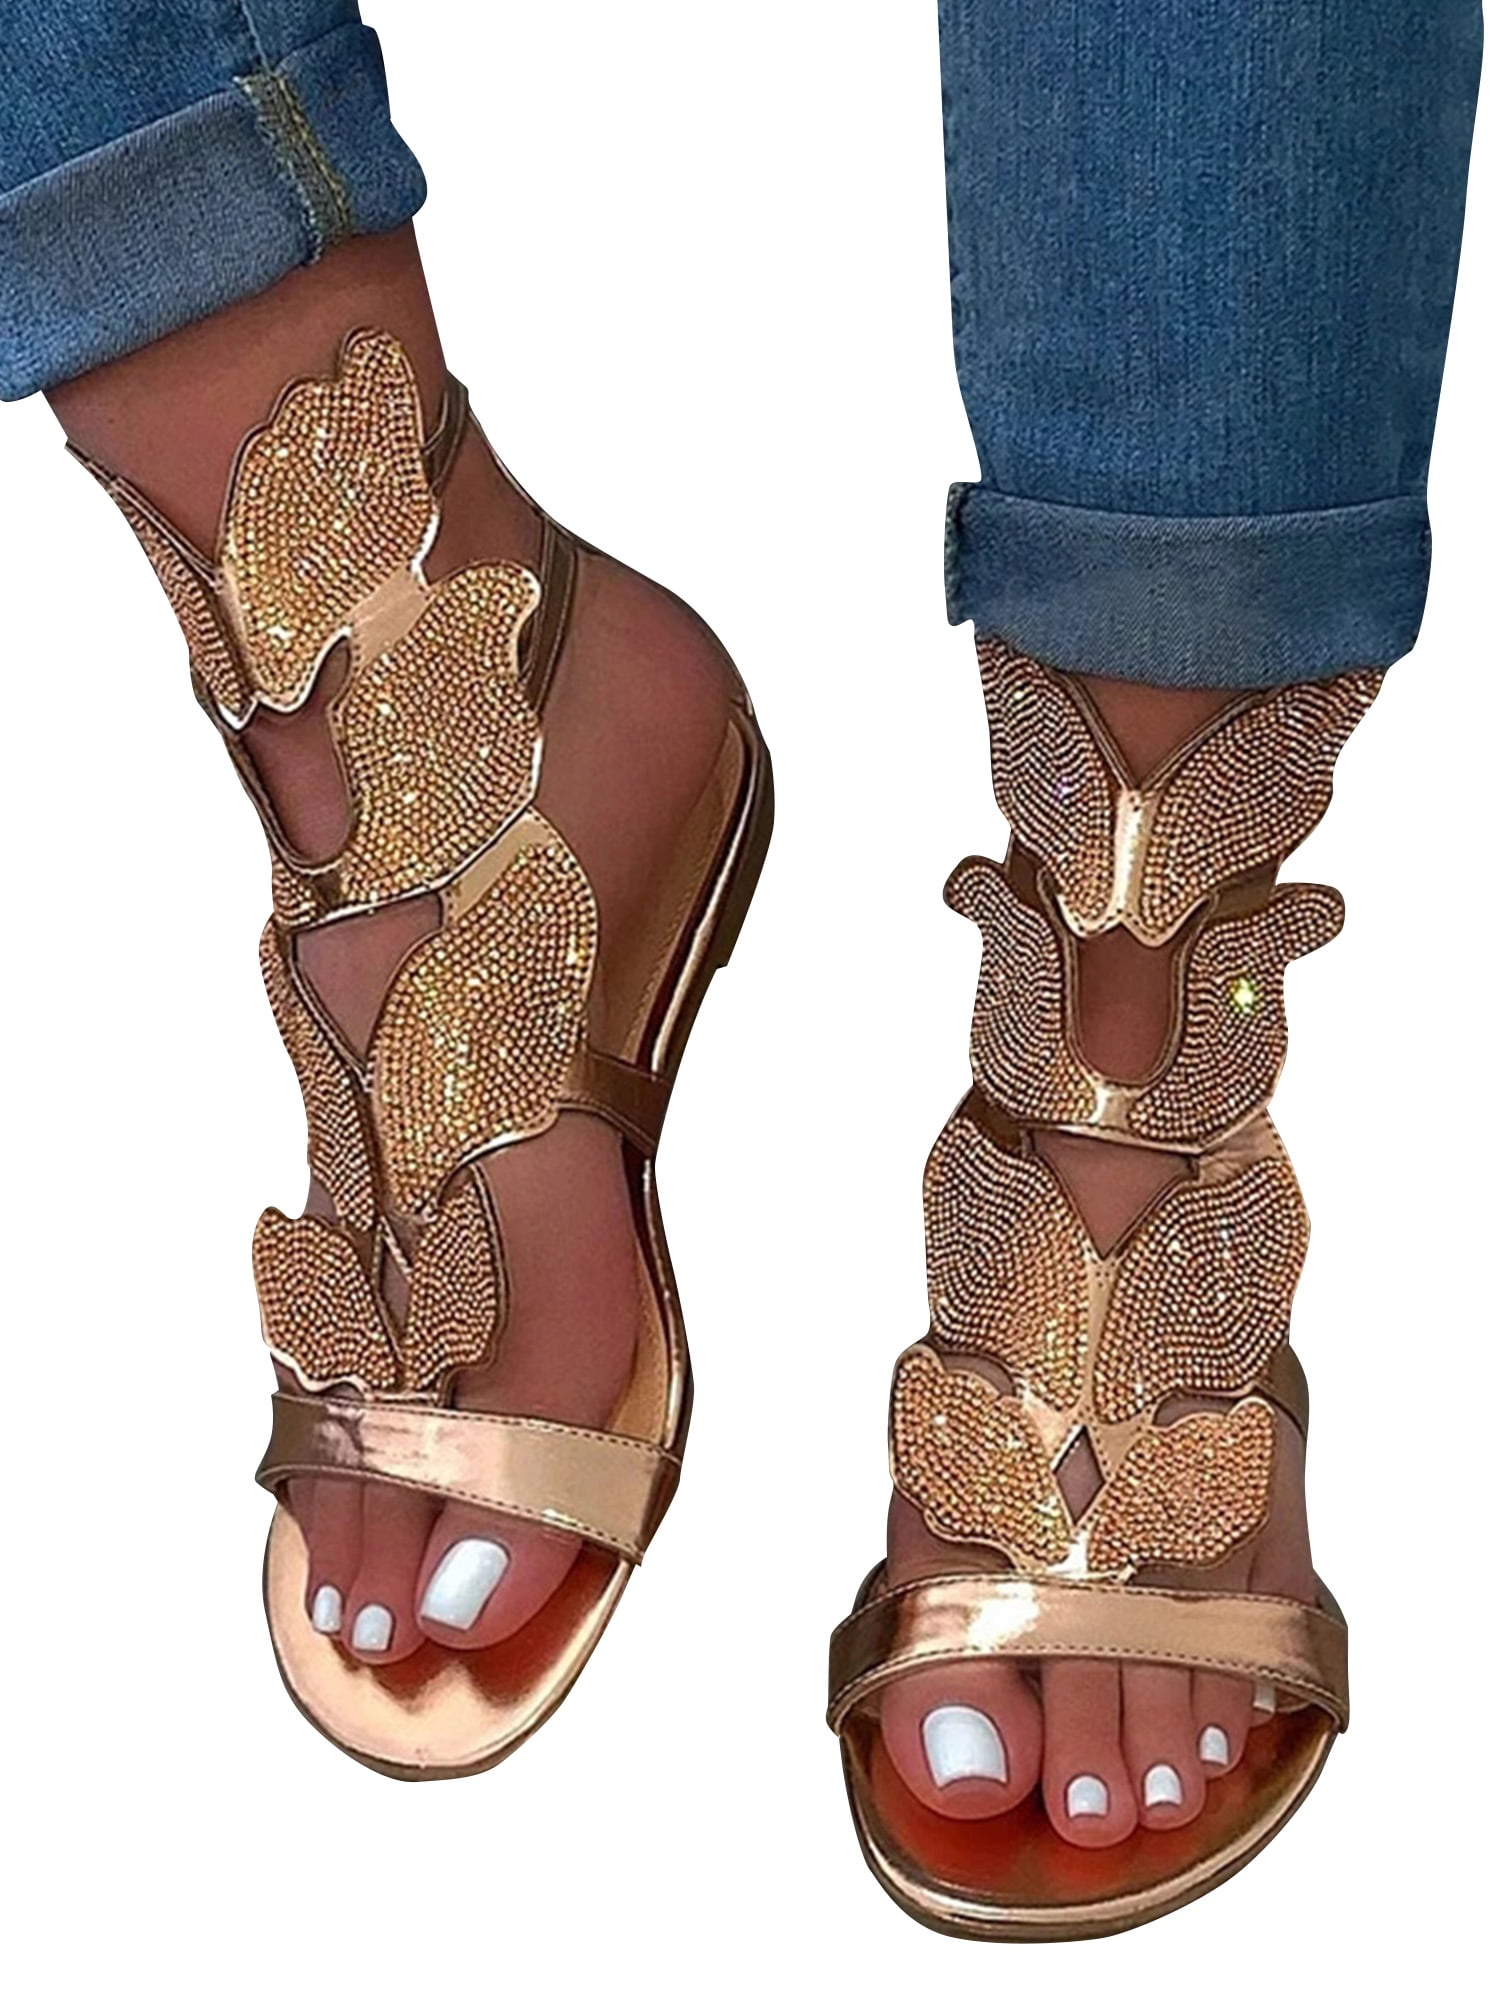 Details about   Womens Platform Heel Sandals Summer Multi-Color Ankle Strap Buckle Sandals Shoes